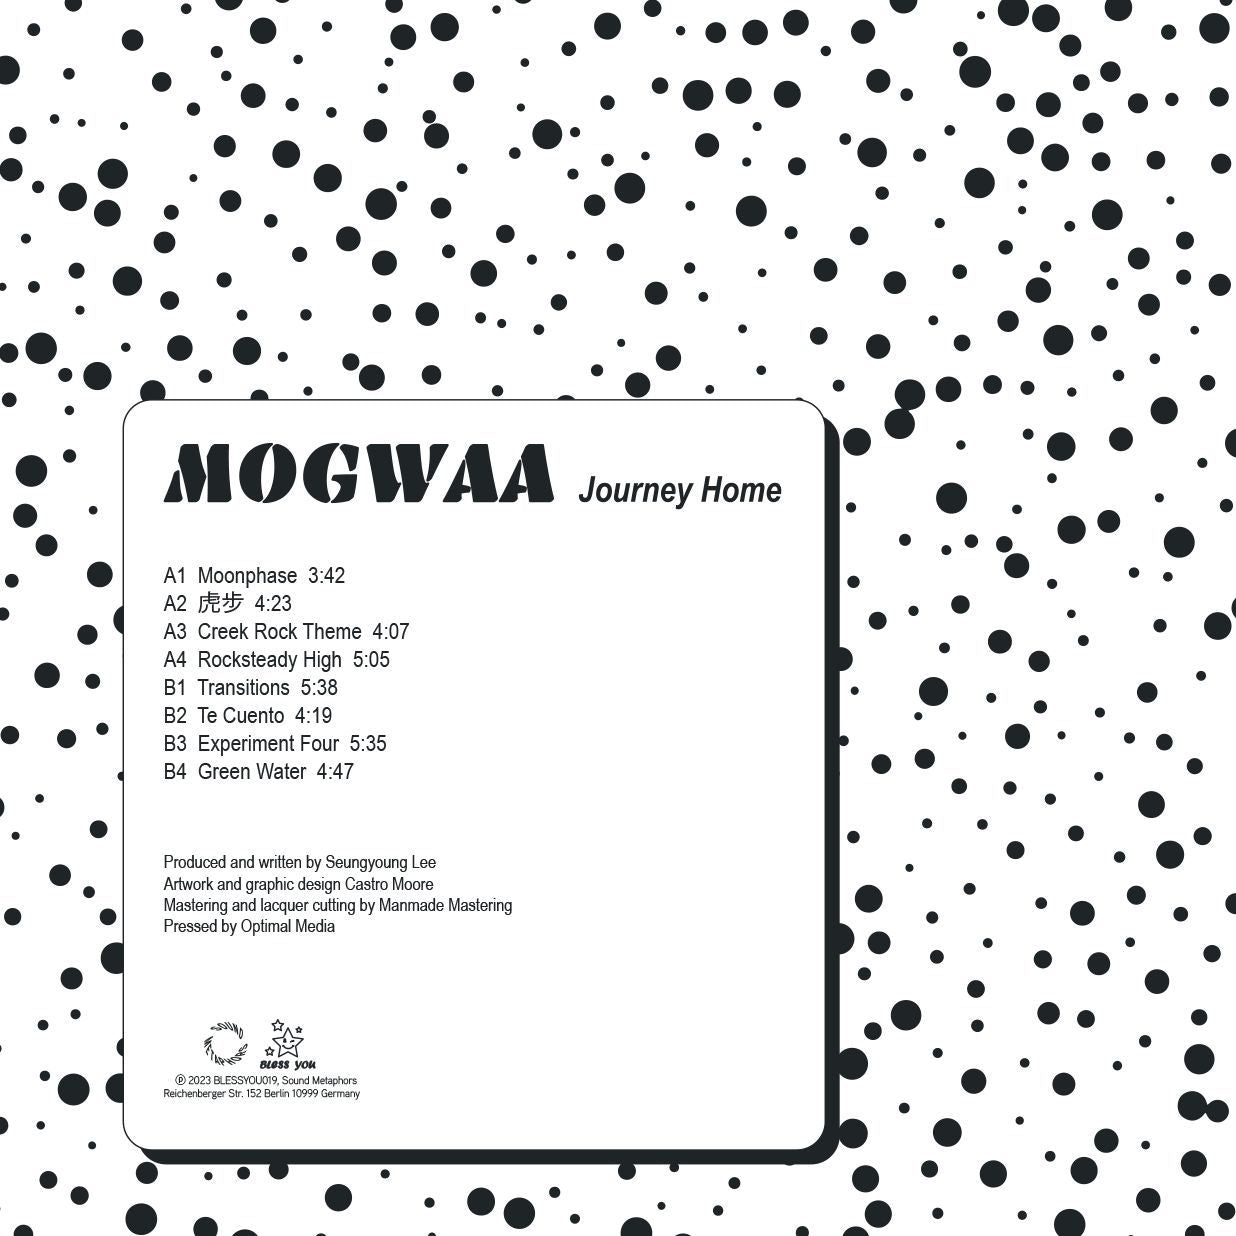 Mogwaa - Journey Home